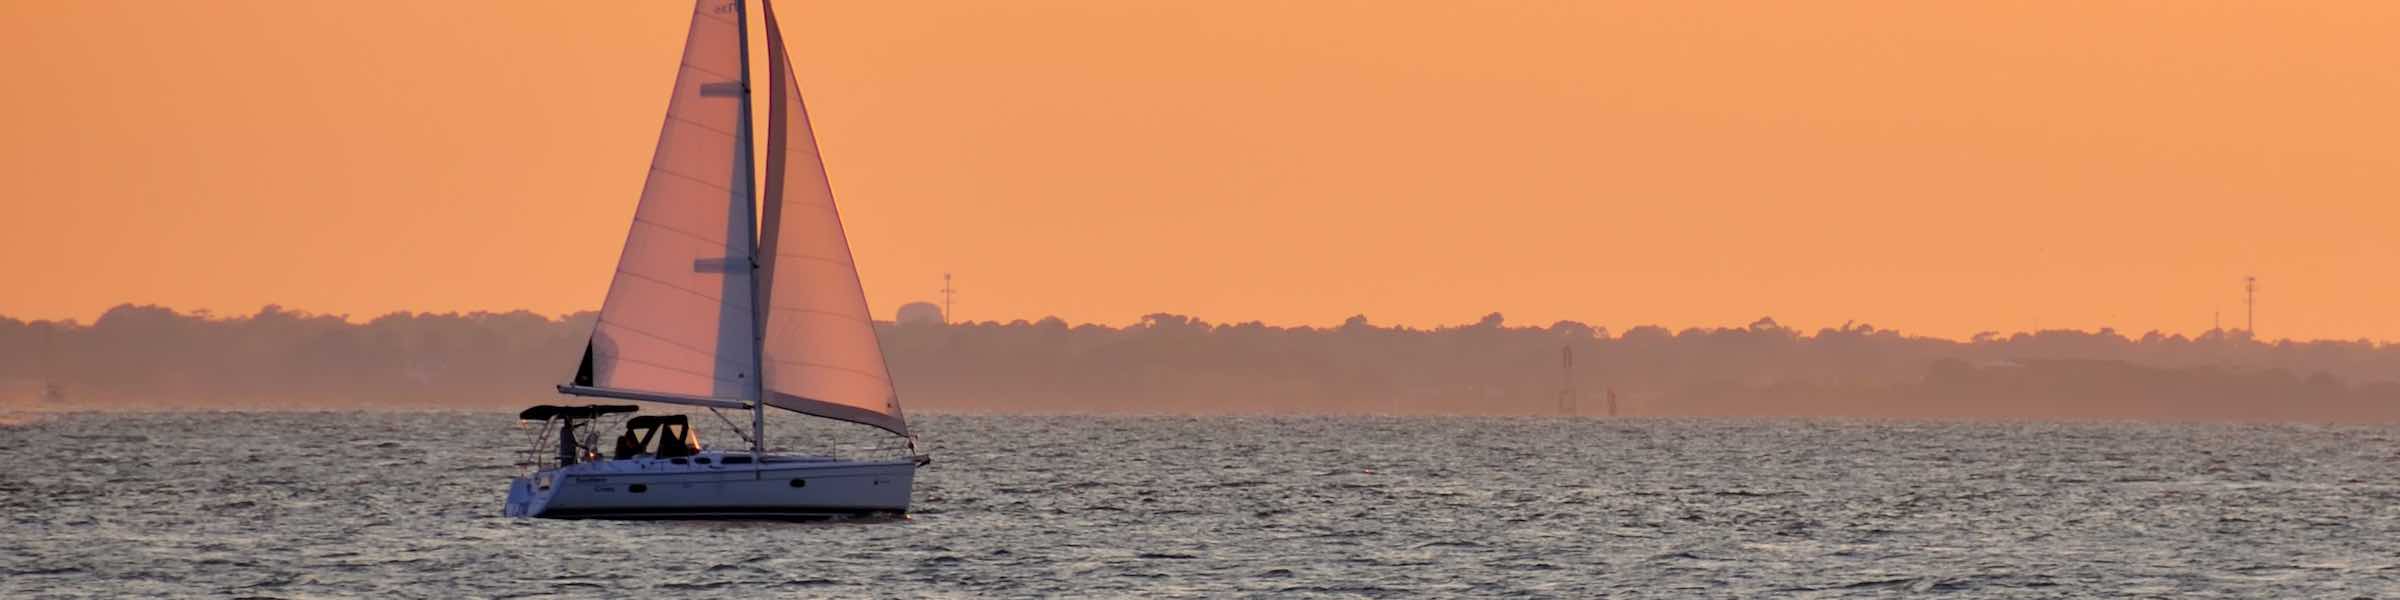 A sailed yacht at sunset.